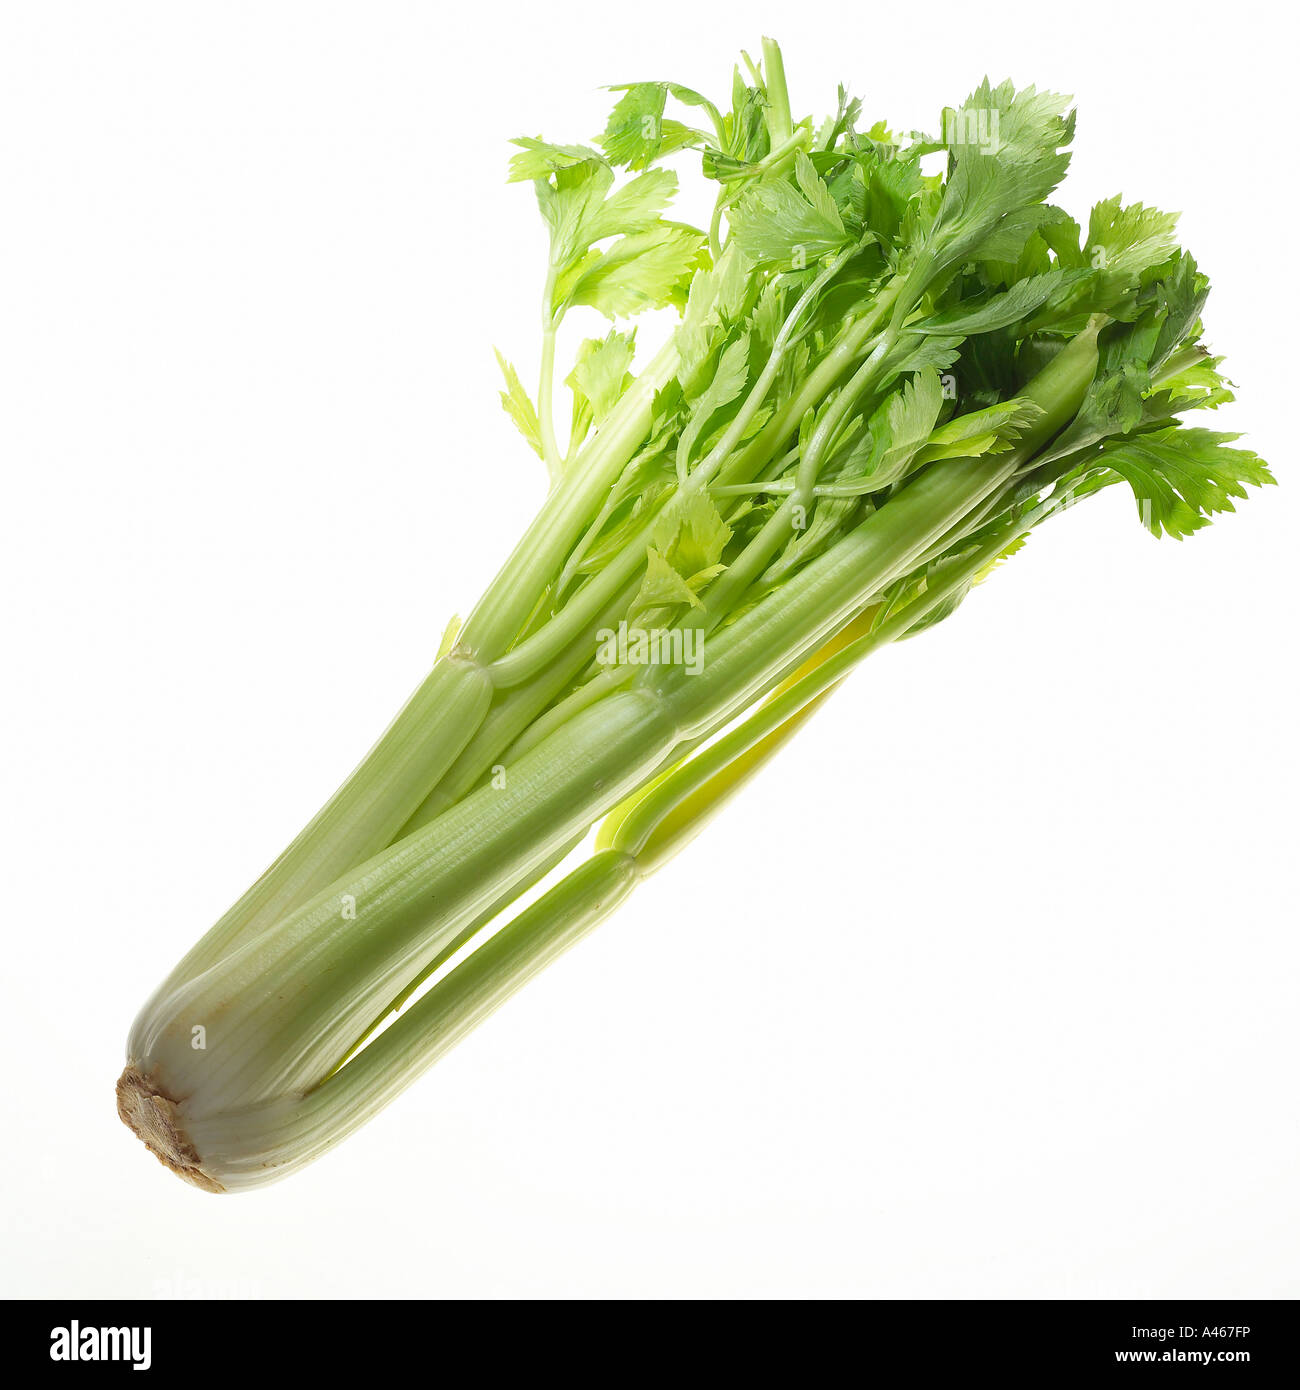 A celery on a white background Stock Photo